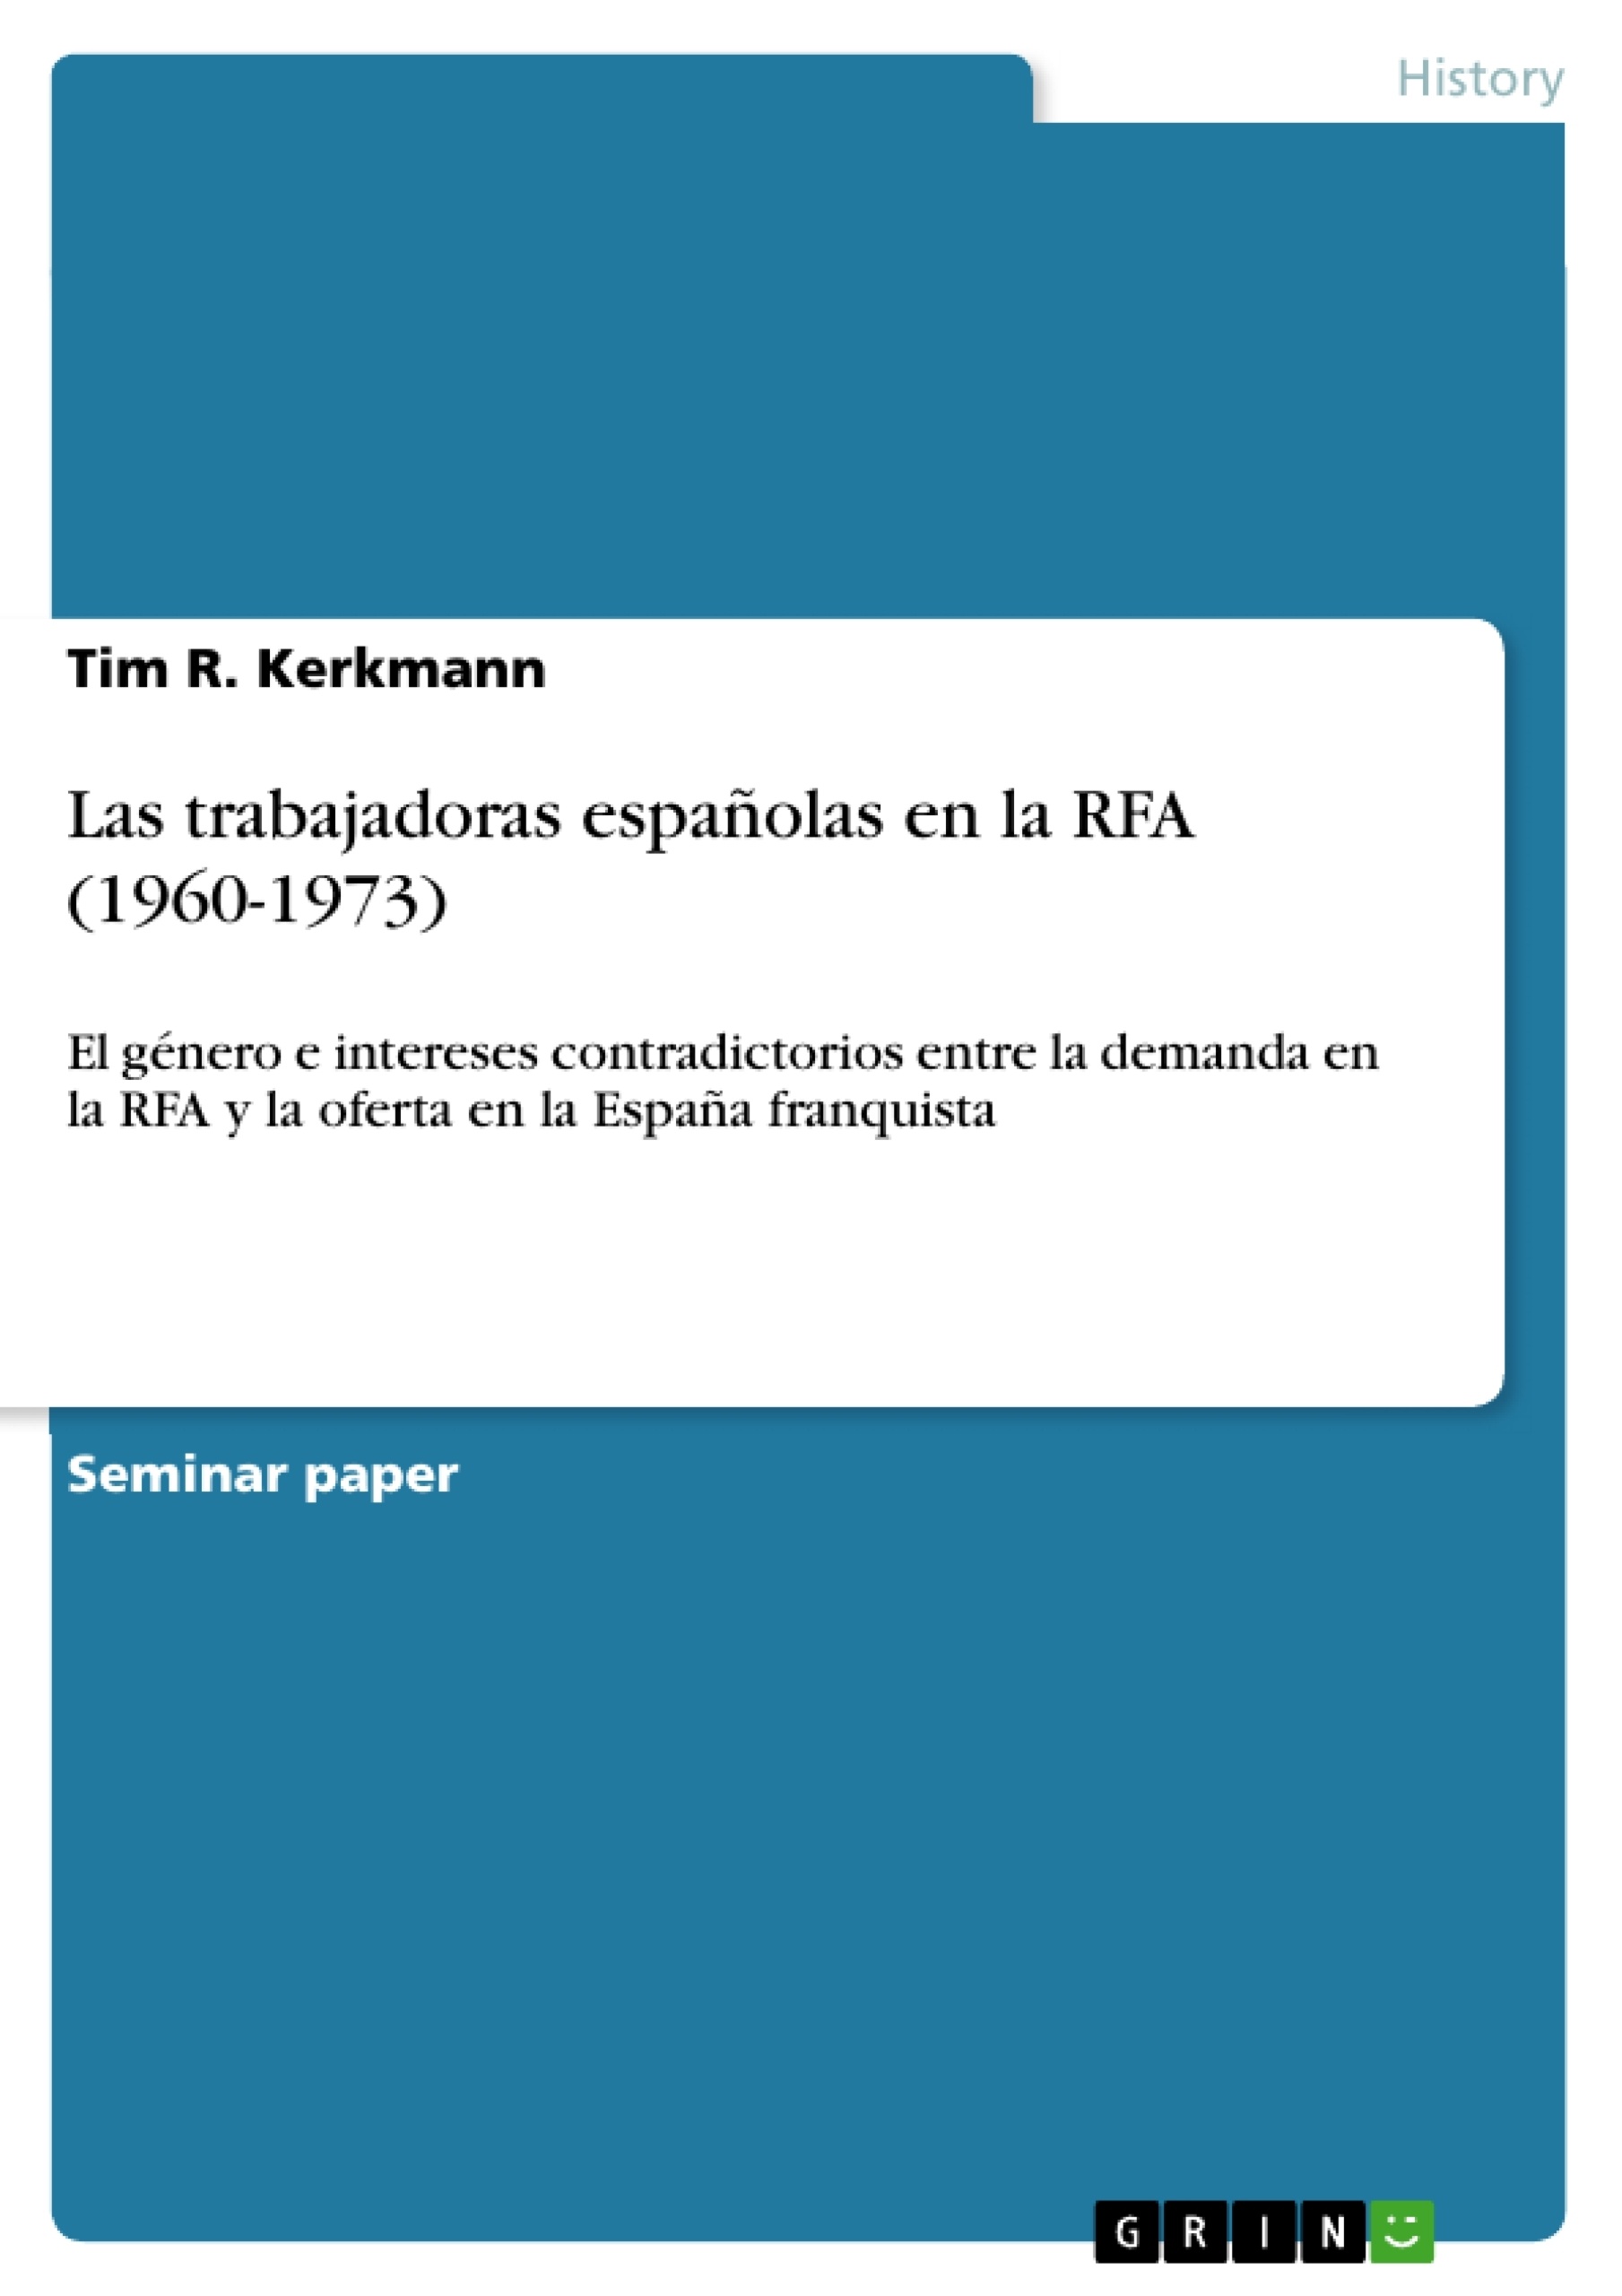 Title: Las trabajadoras españolas en la RFA (1960-1973)